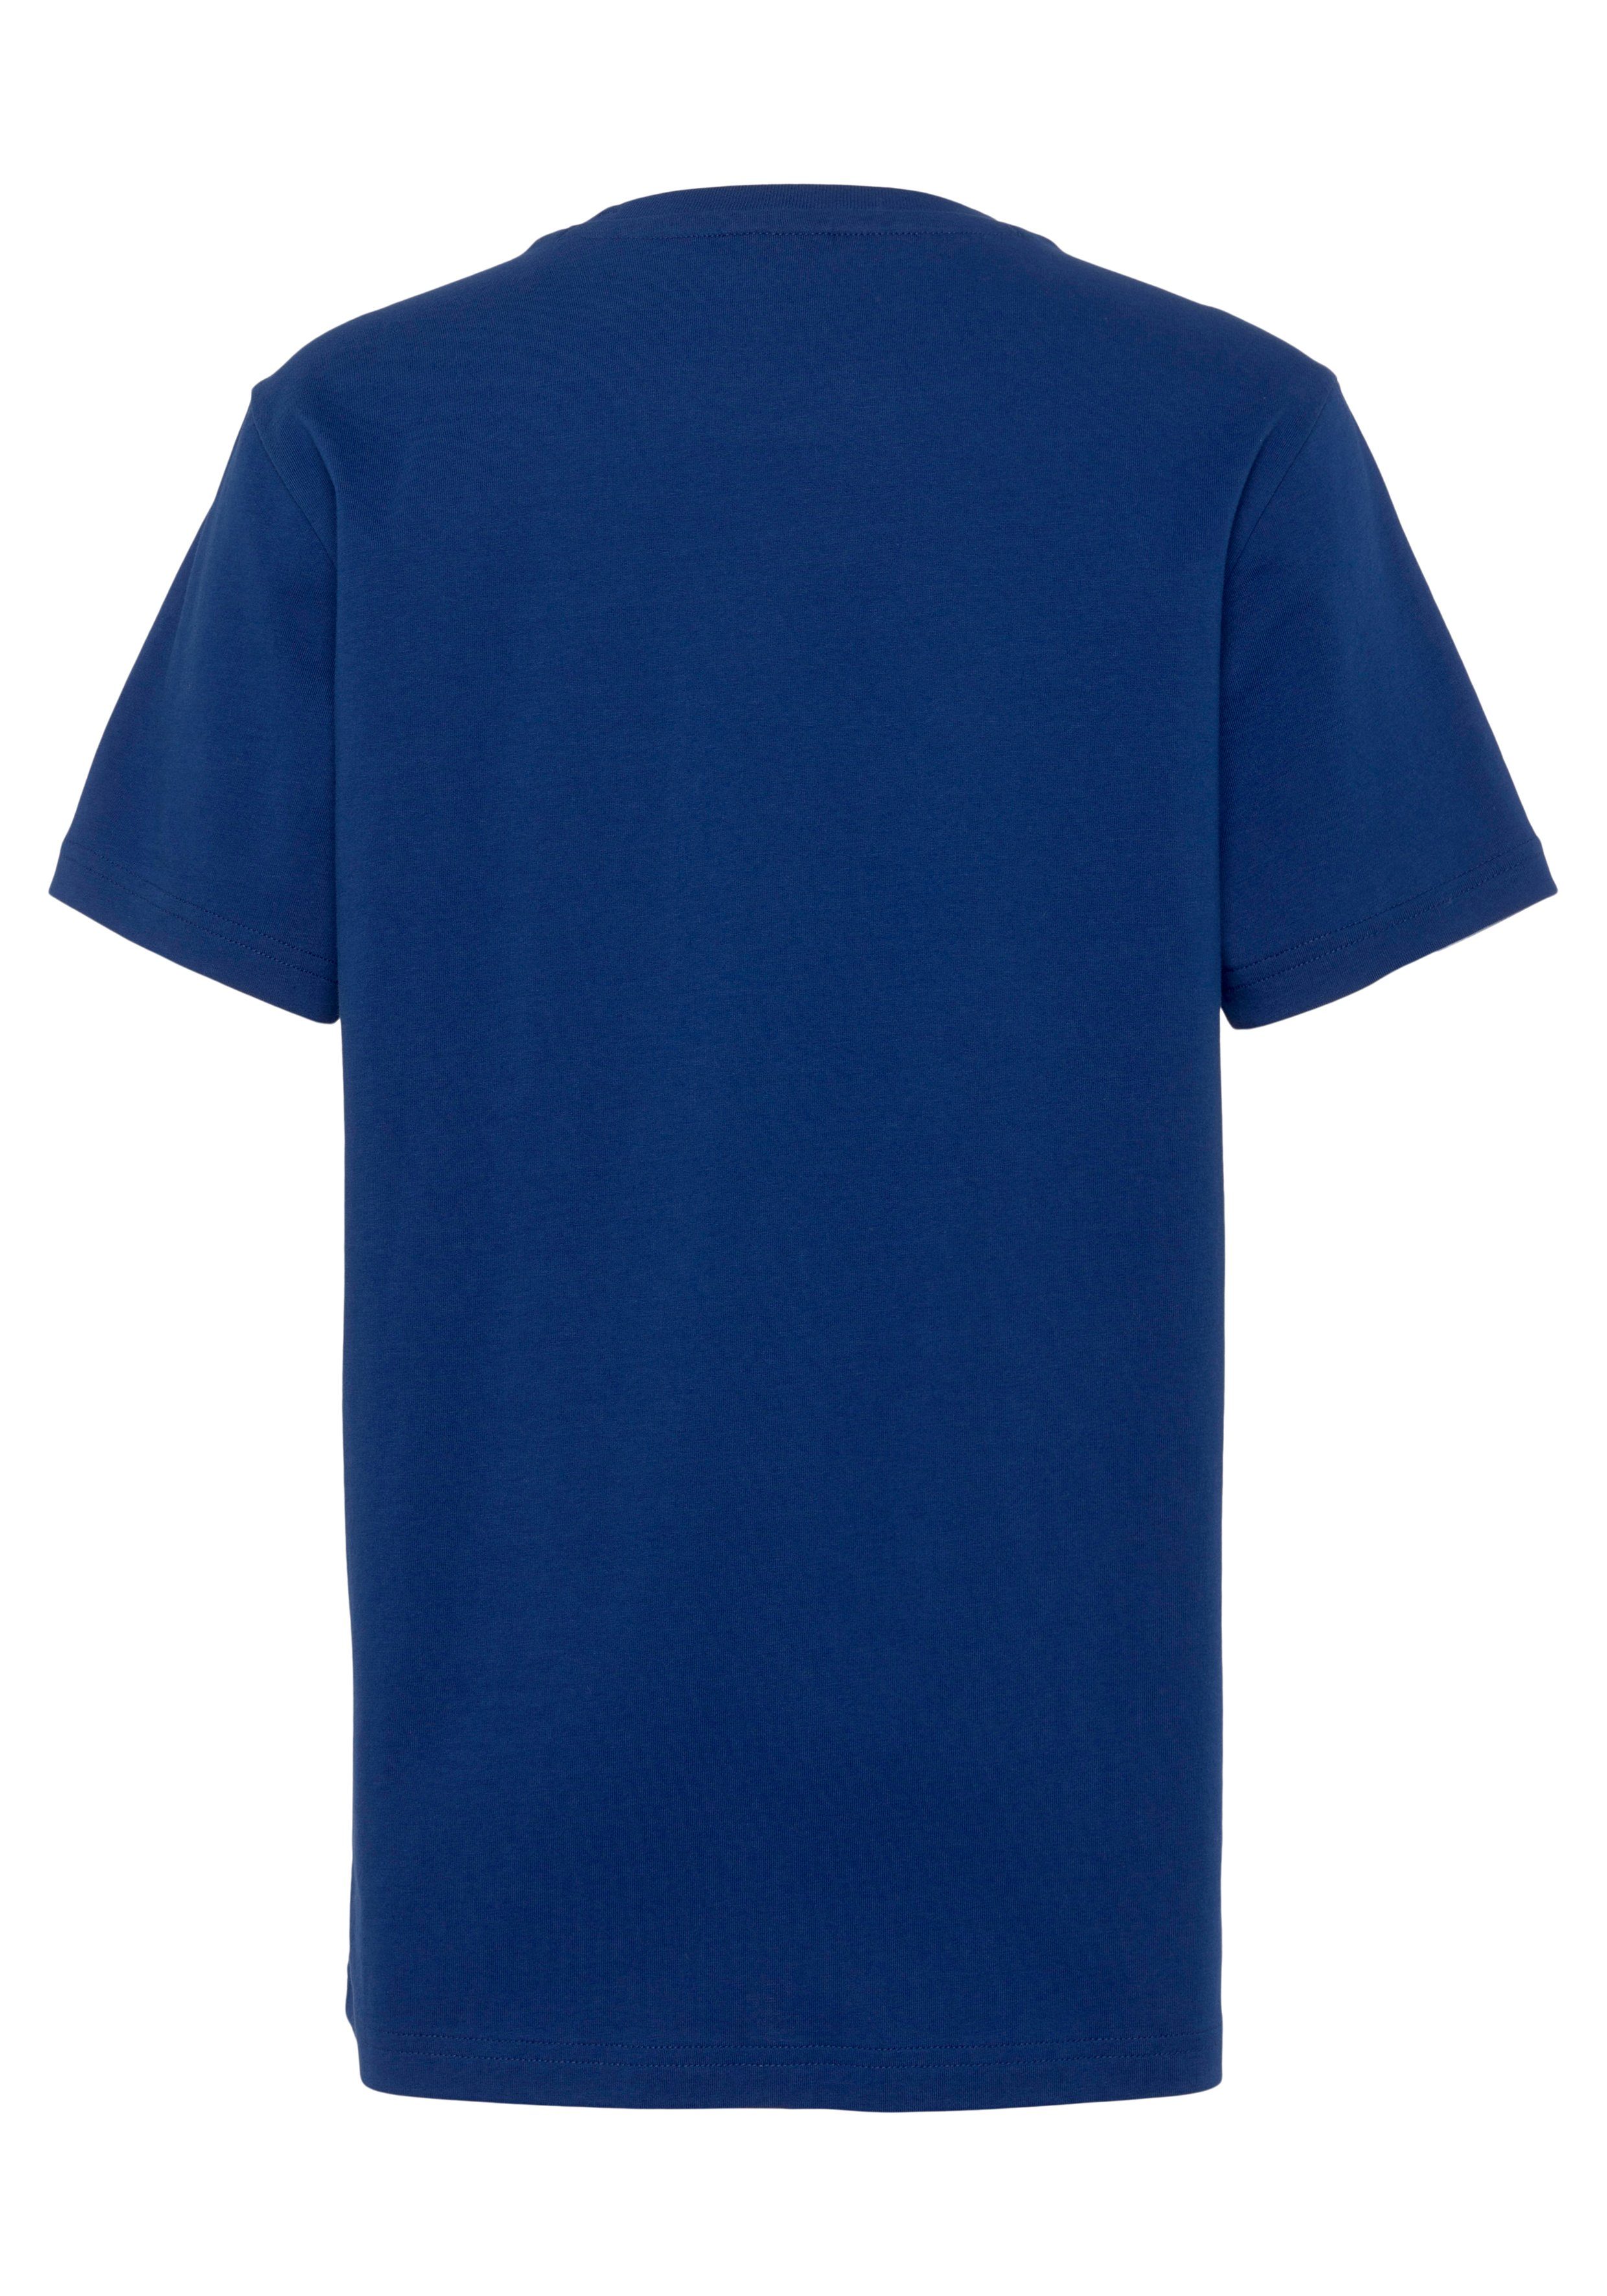 Champion T-Shirt Crewneck Kinder - blau Graphic für Shop T-Shirt